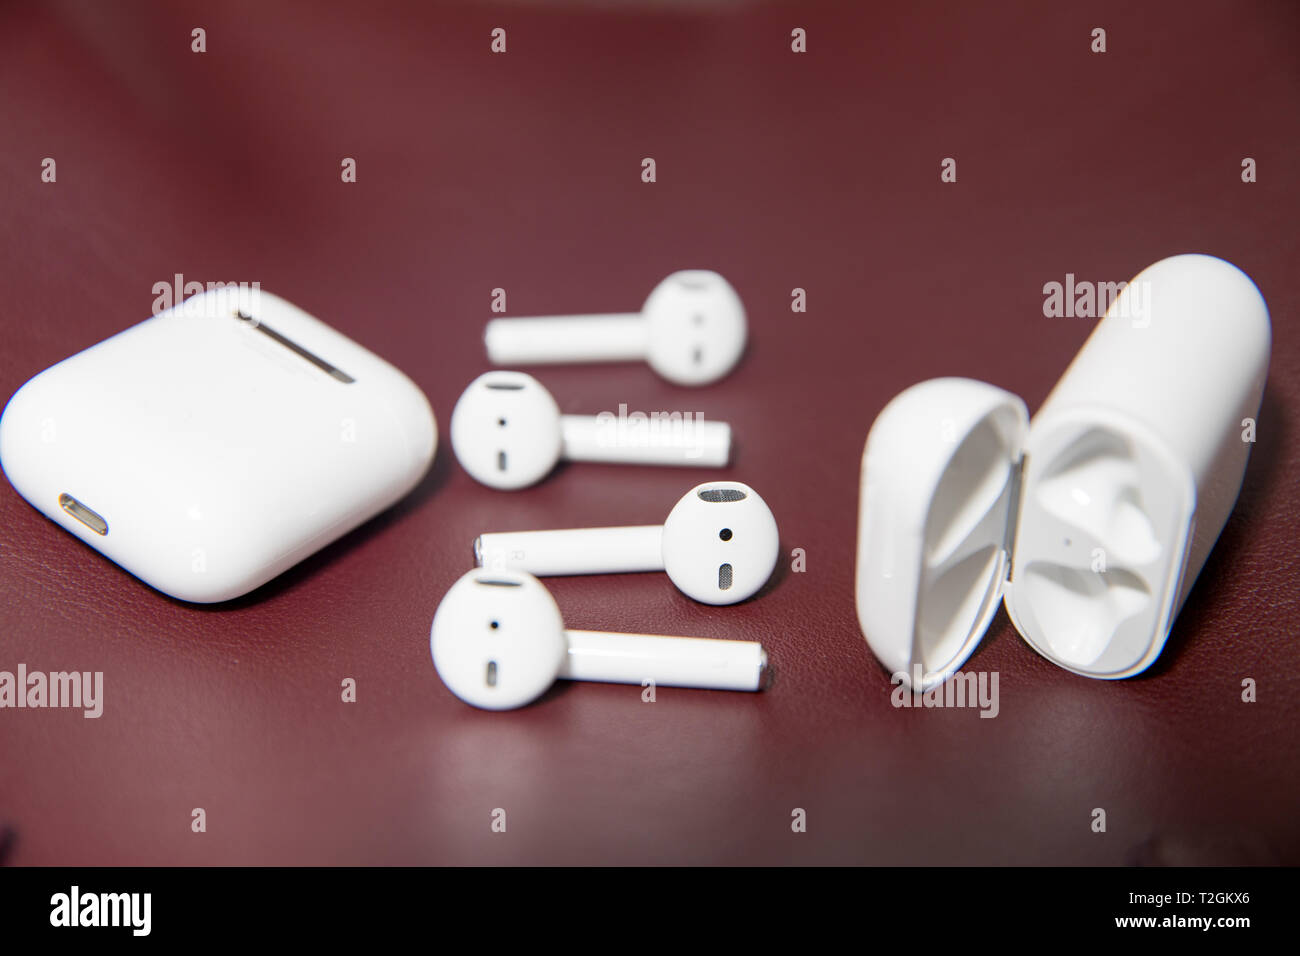 Lawrence County New Jersey, 11. März 2019: Apple AirPods drahtlose  Bluetooth® Kopfhörer und Ladegerät für Apple iPhone. Neue Apple Earpods  Airpods Stockfotografie - Alamy